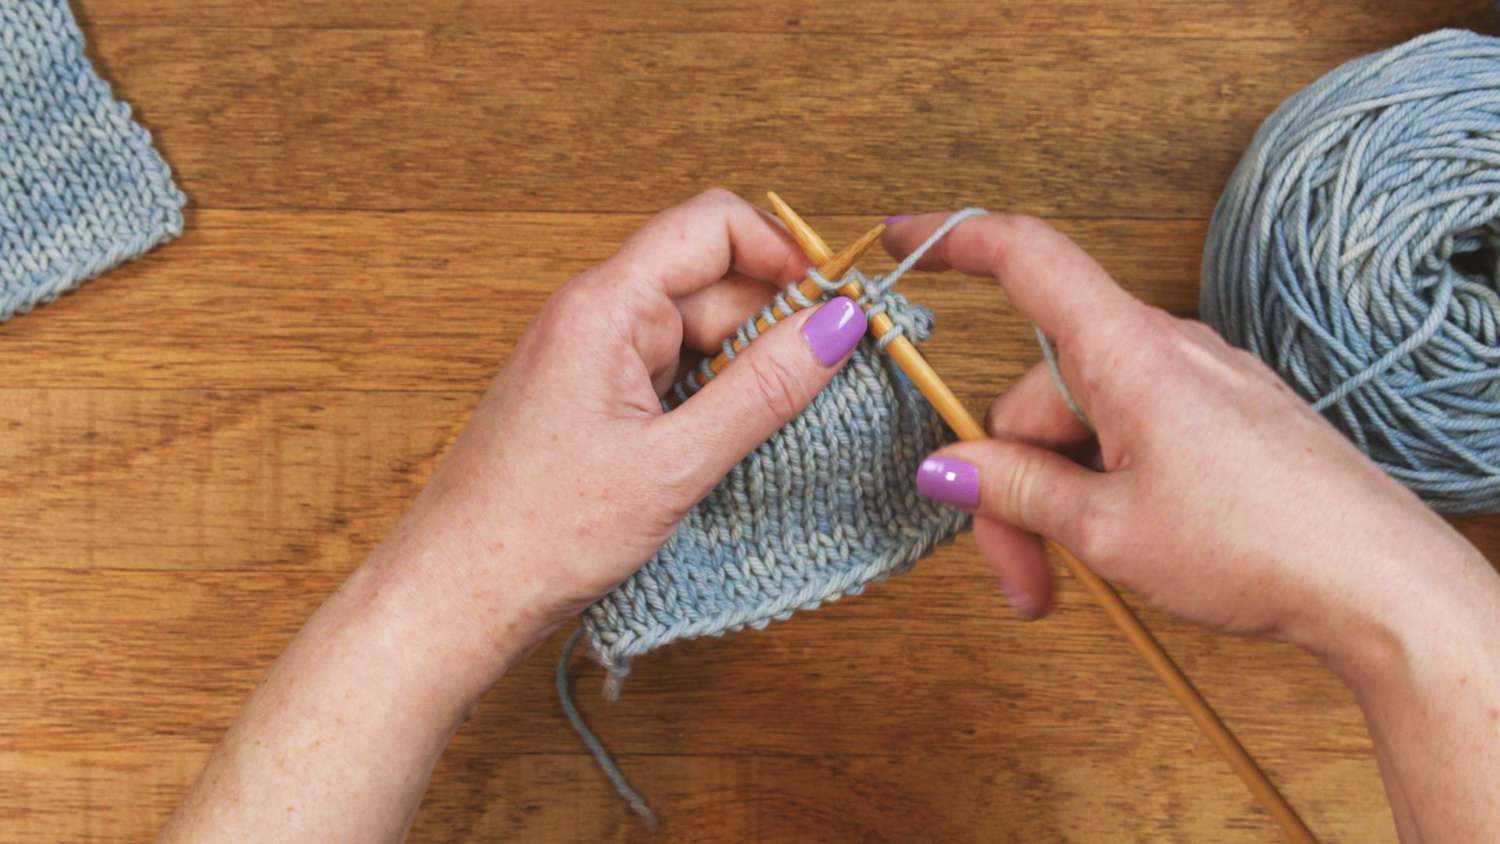 Basic knit stitch